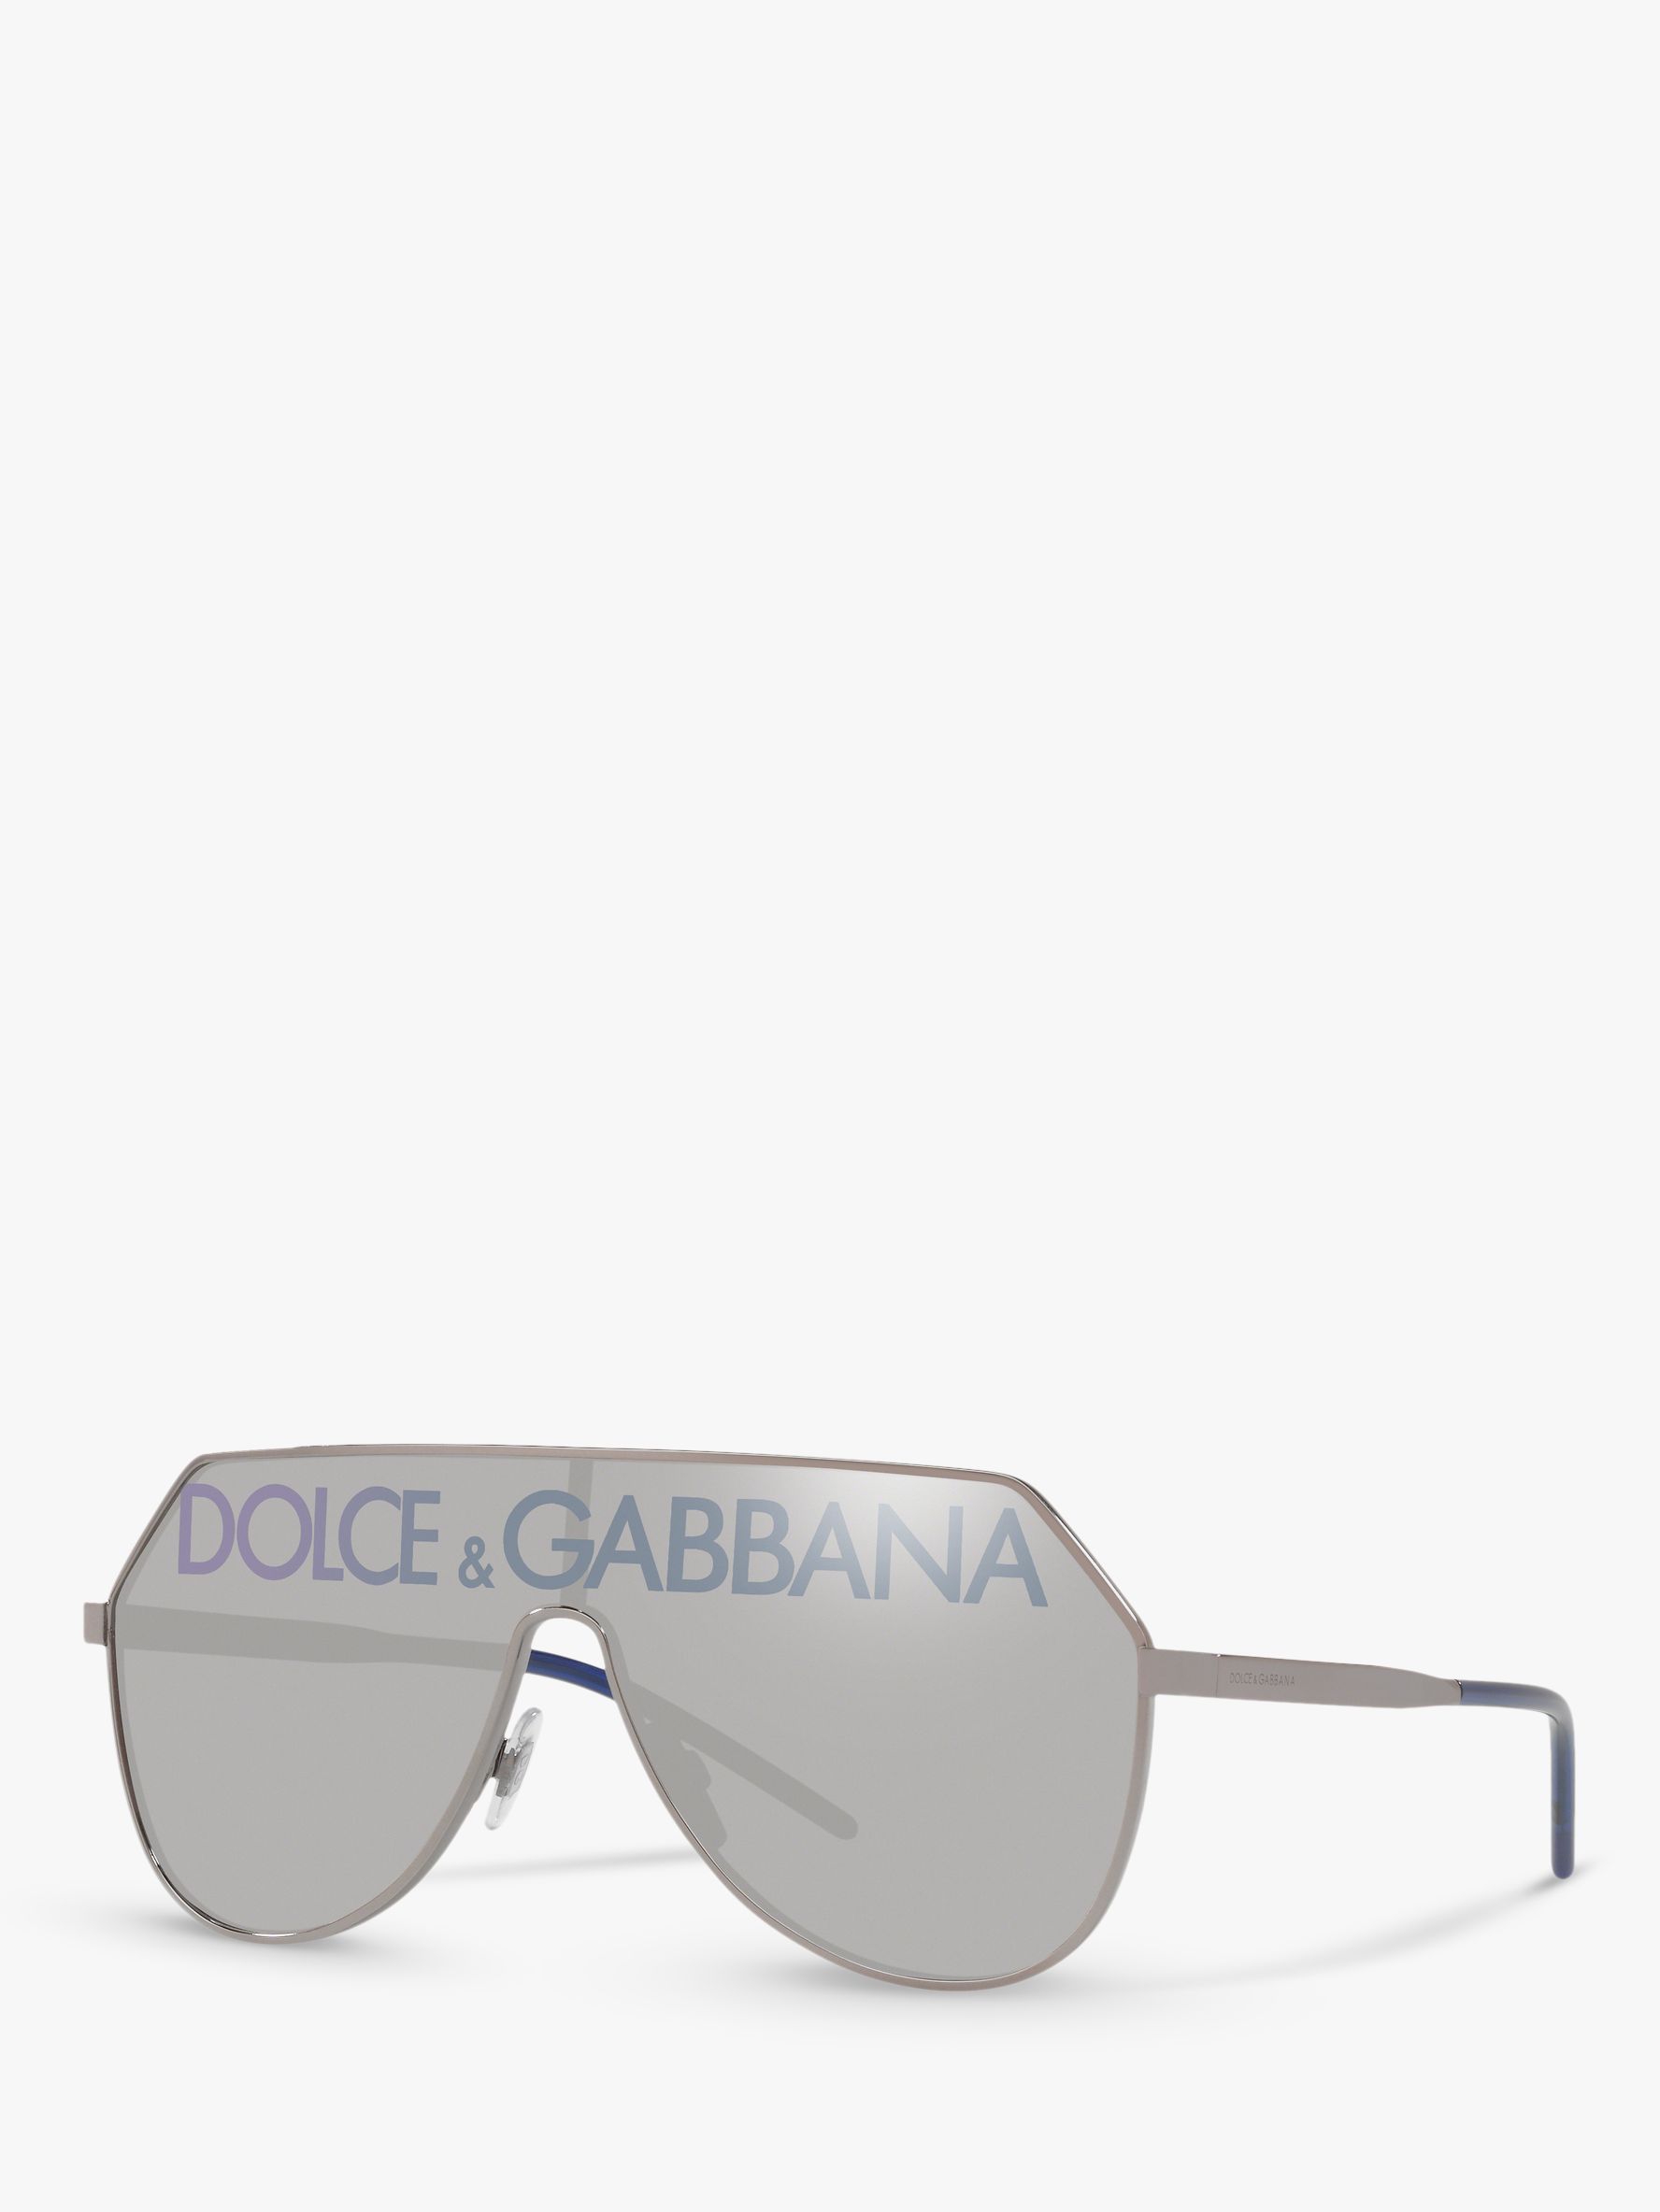 aviators dolce and gabbana sunglasses mens